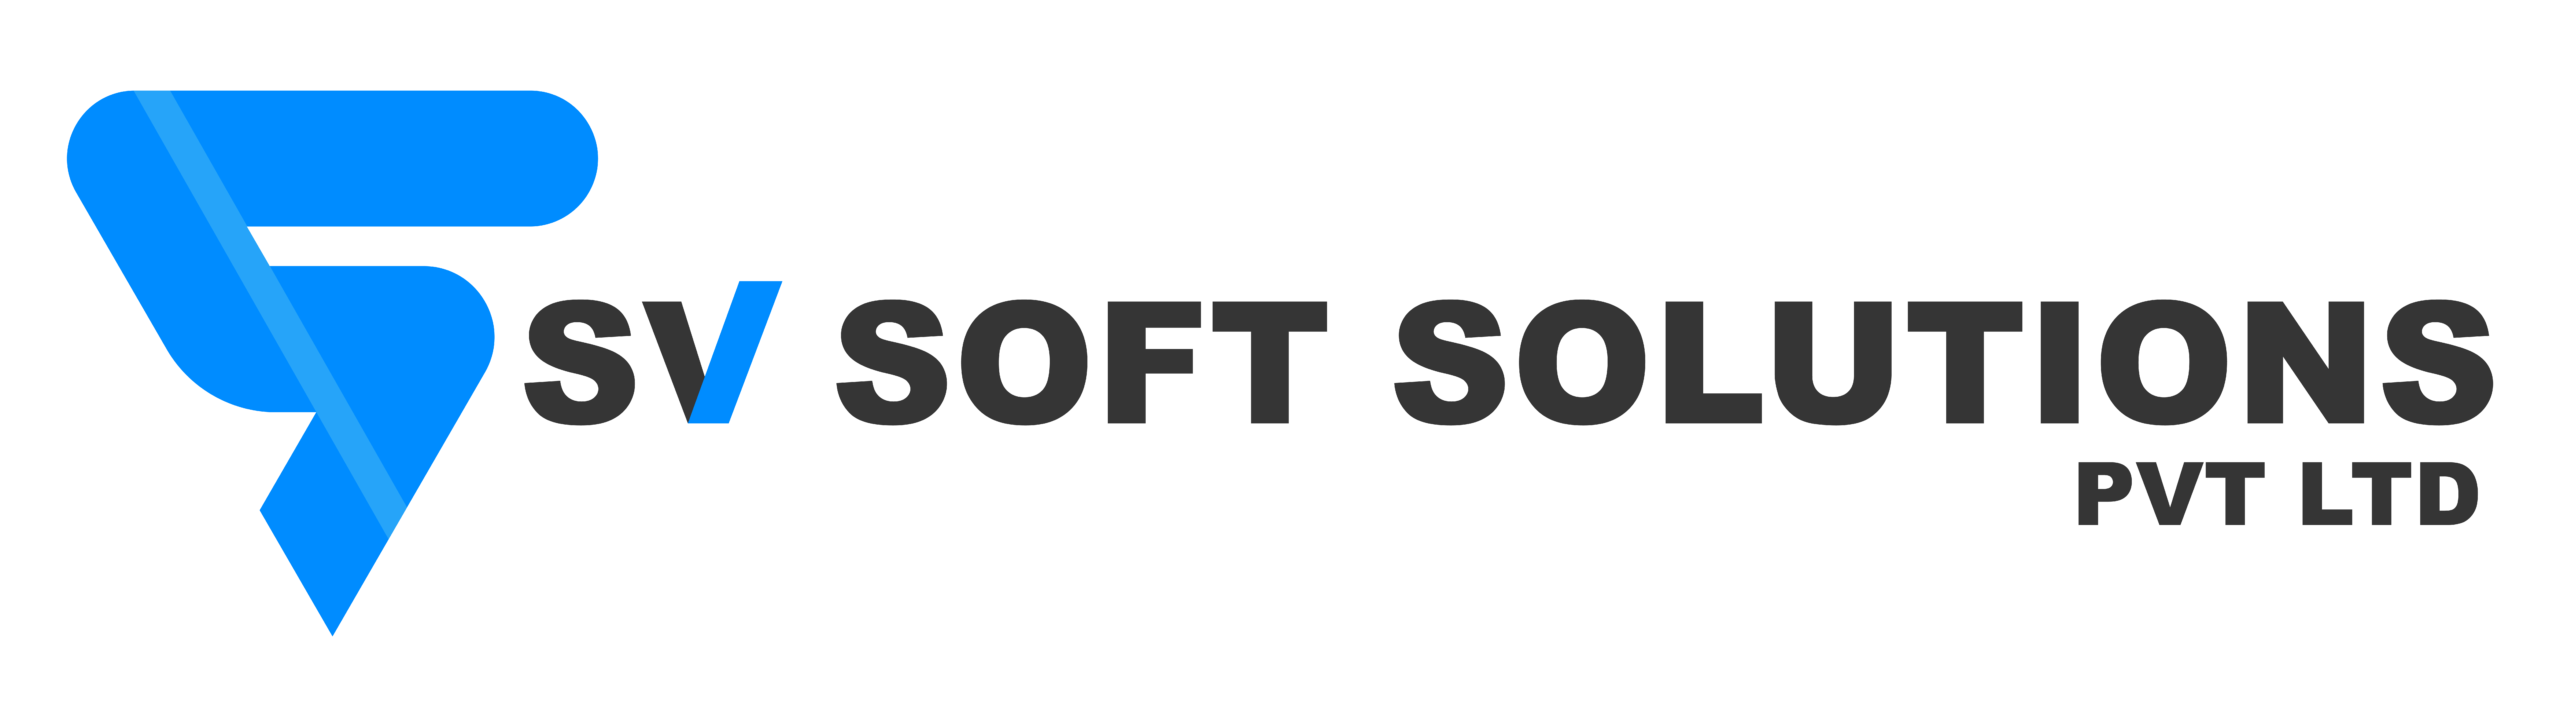 Sv_Soft_Solutions